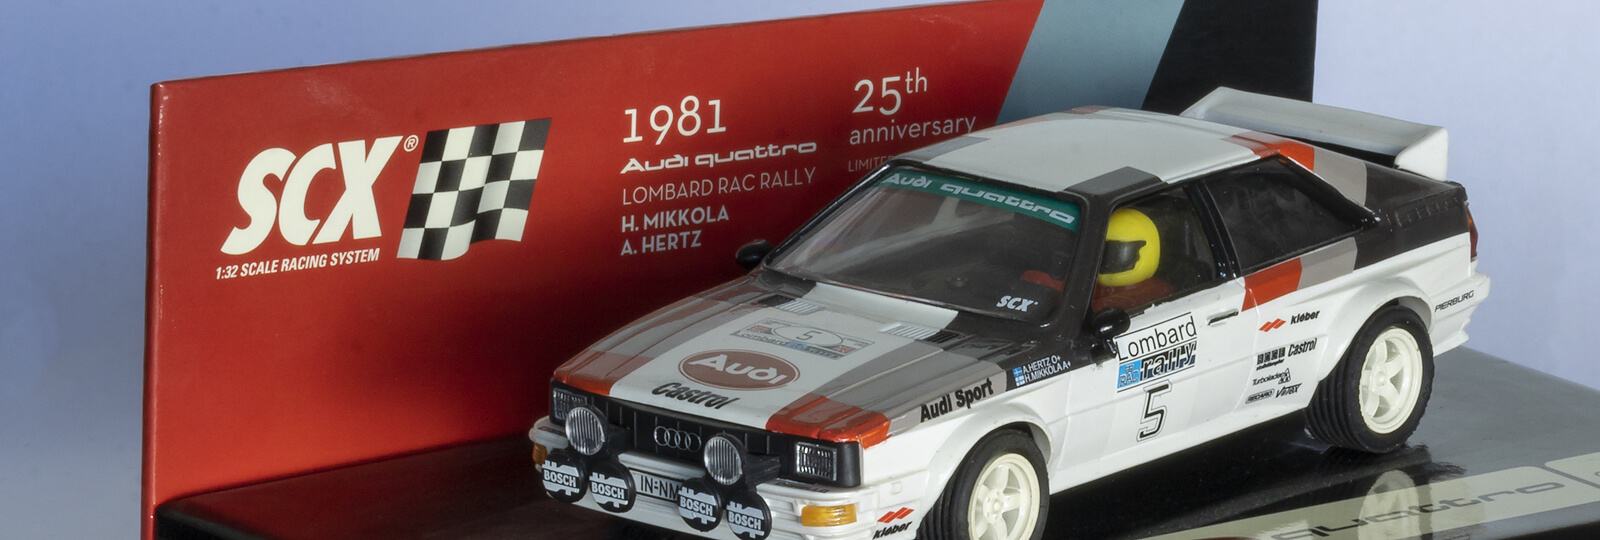 Automodell Audi quattro Rallye 1981